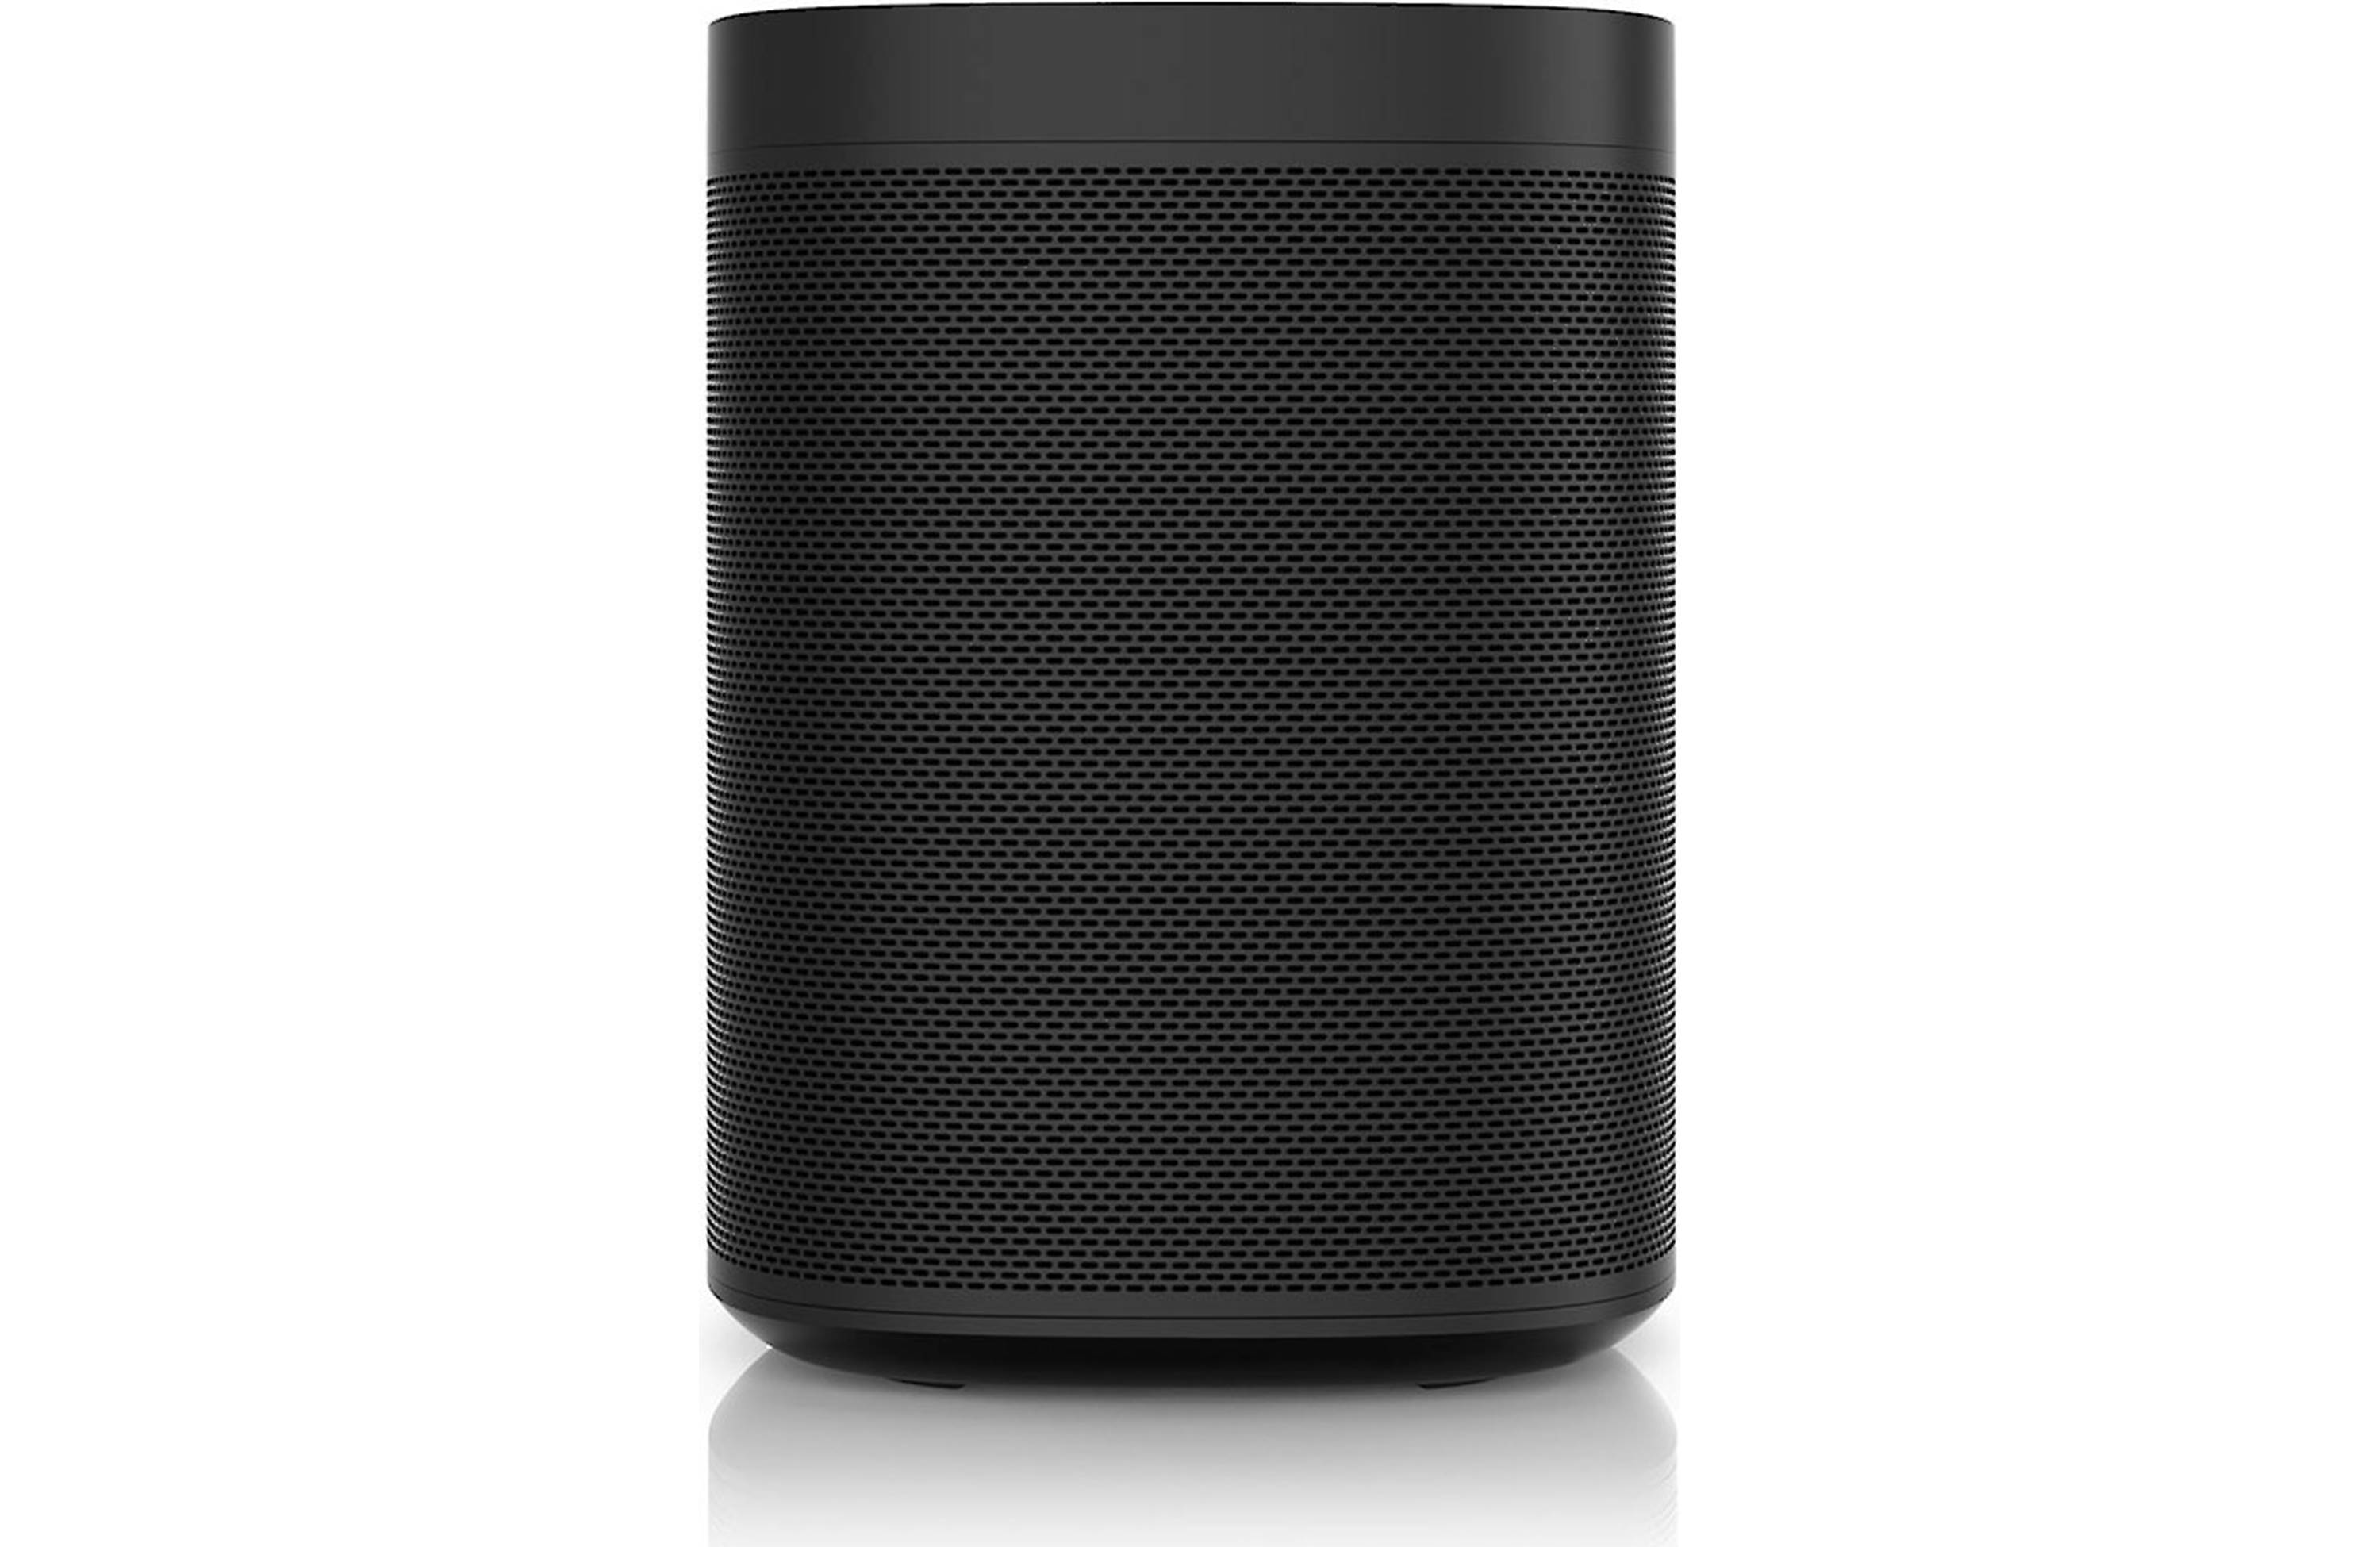 Sonos Gen 2 Wireless Speaker with Amazon Alexa Voice Assistant — and Sound